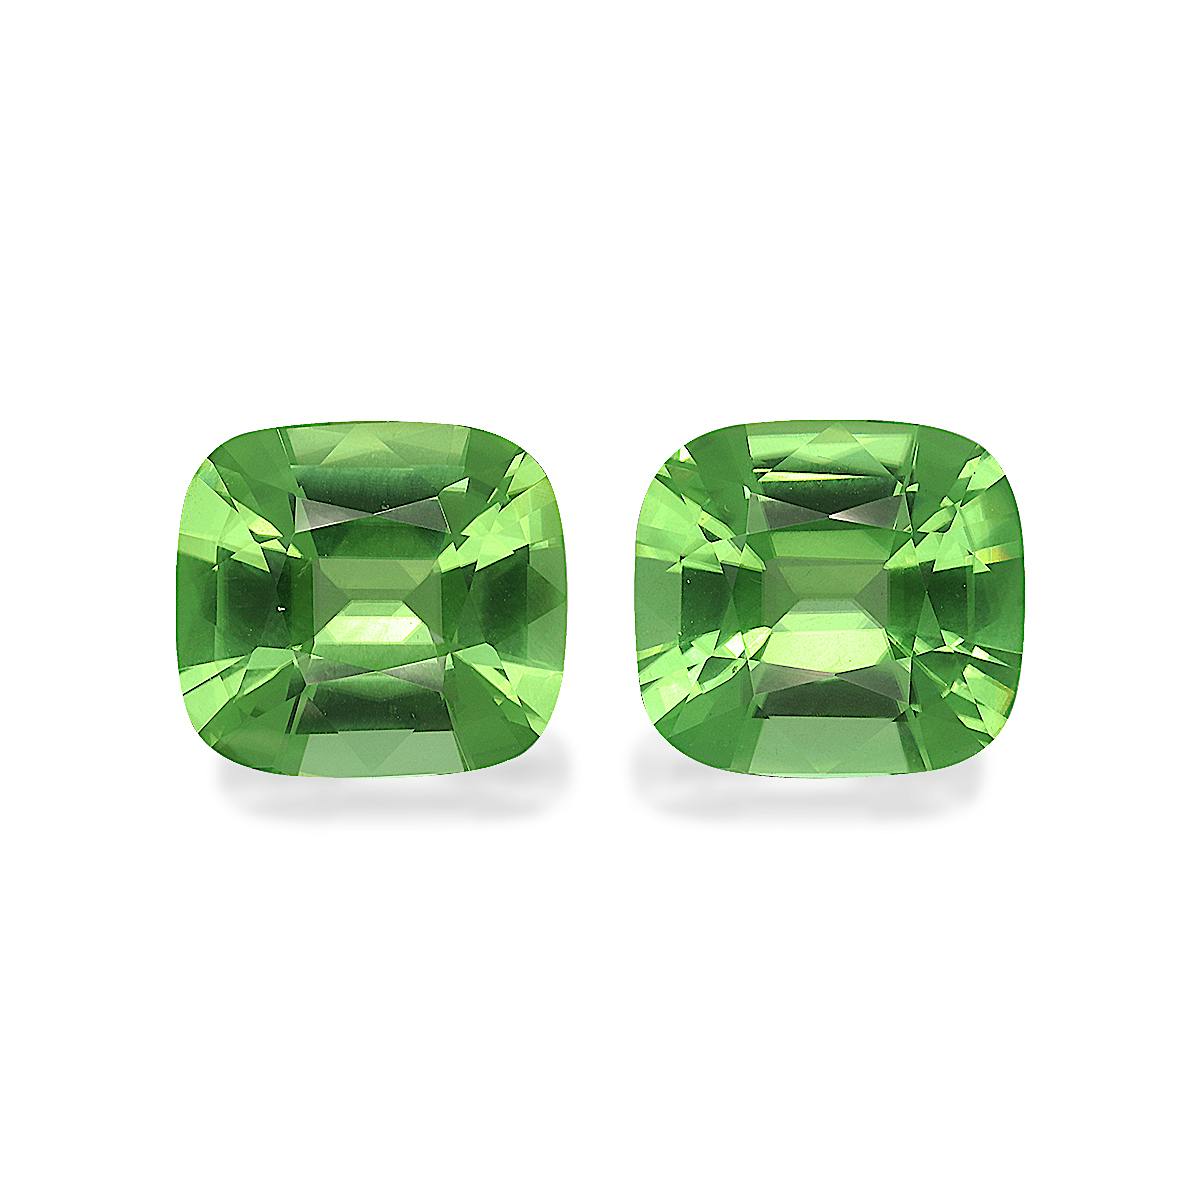 Green Peridot 16.67ct - Main Image